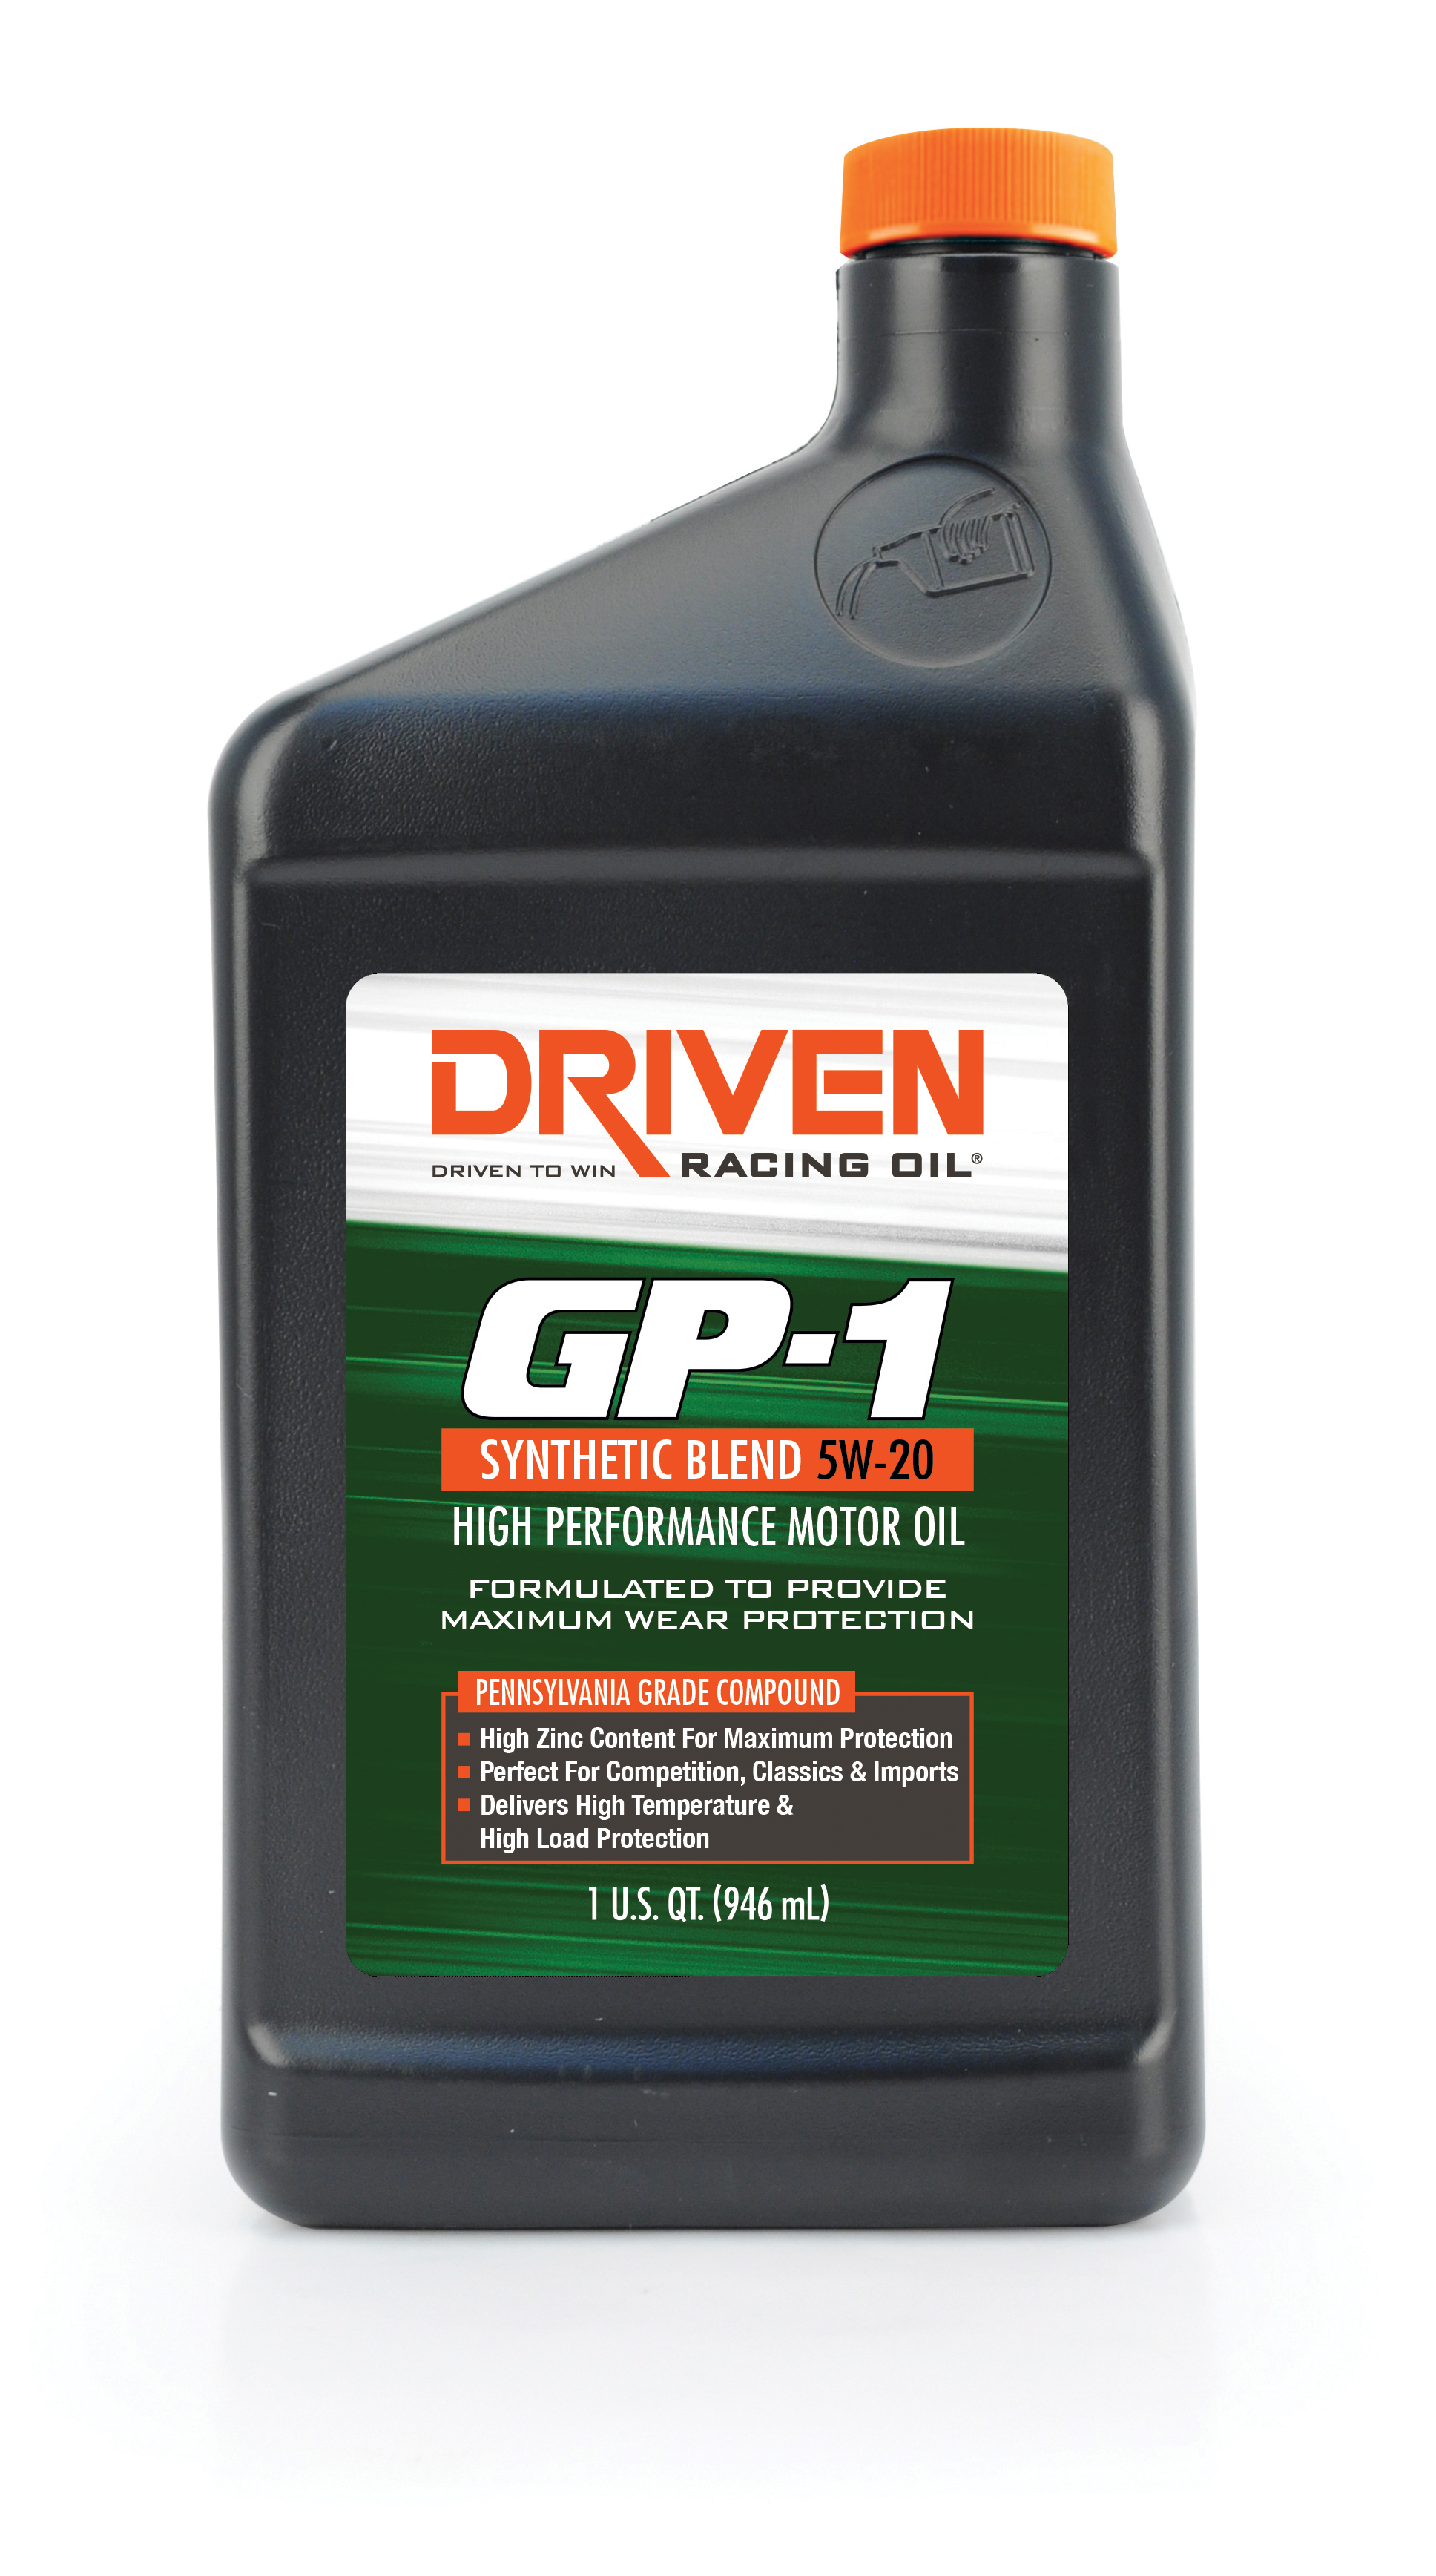 Driven GP1 5W-20 Synthetic Blend Racing Oil - 1 Quart Bottle 19206